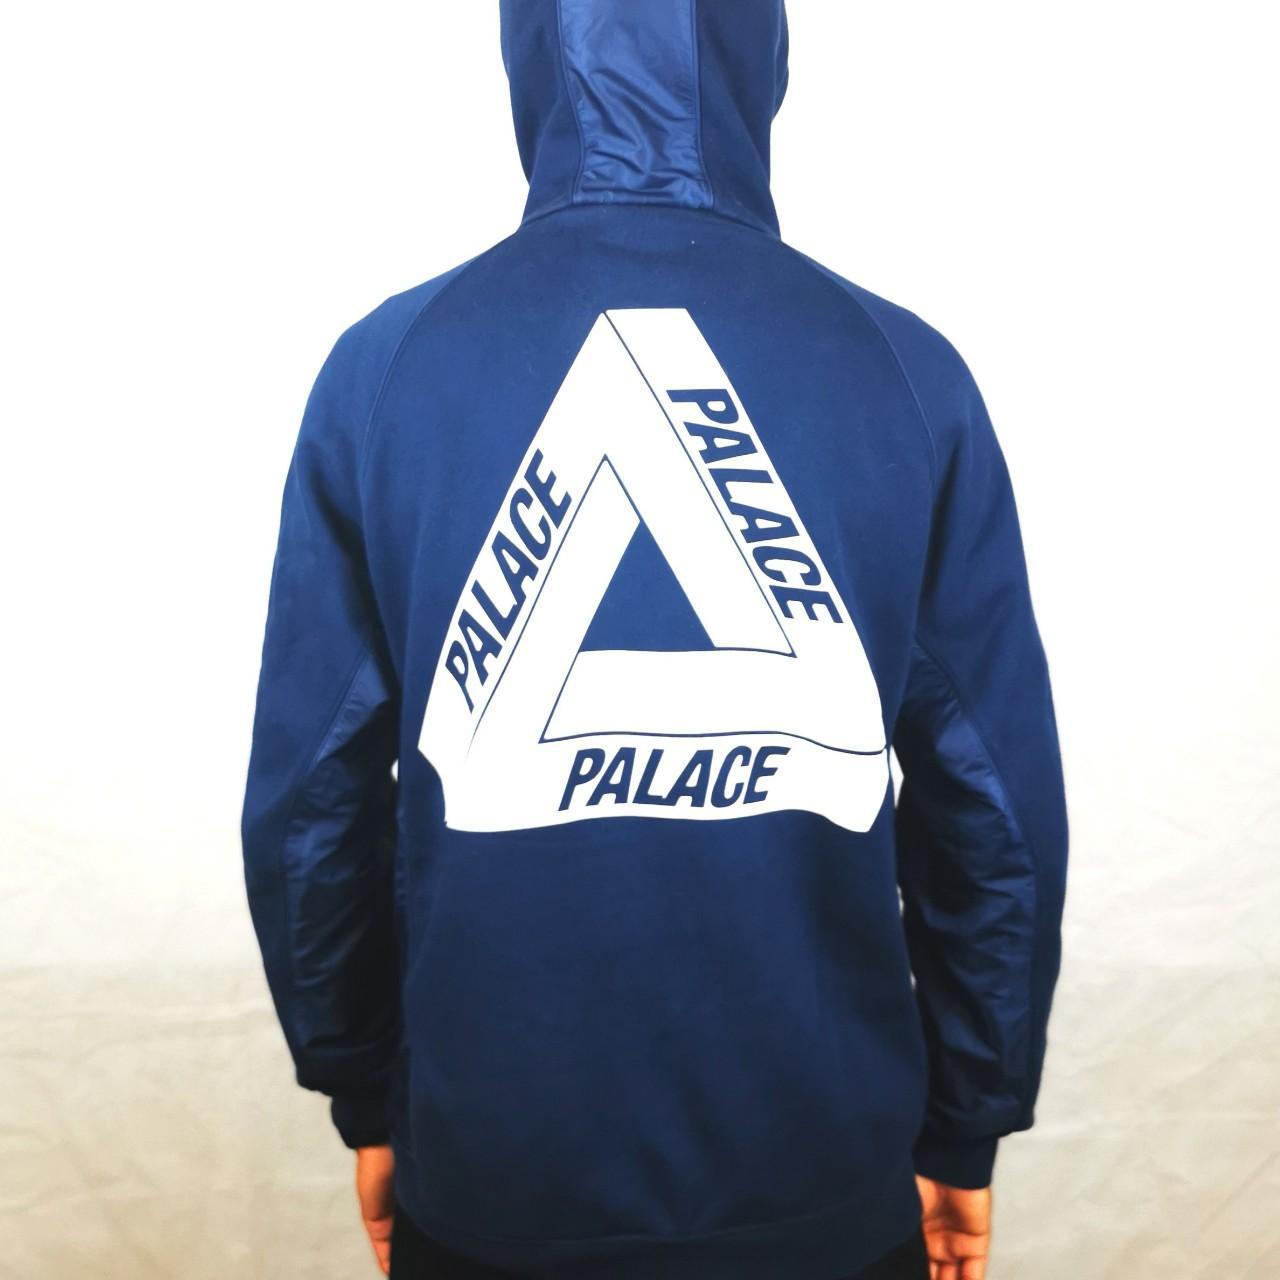 Palace X adidas hoodie #palace #adidas quarter zip - Depop